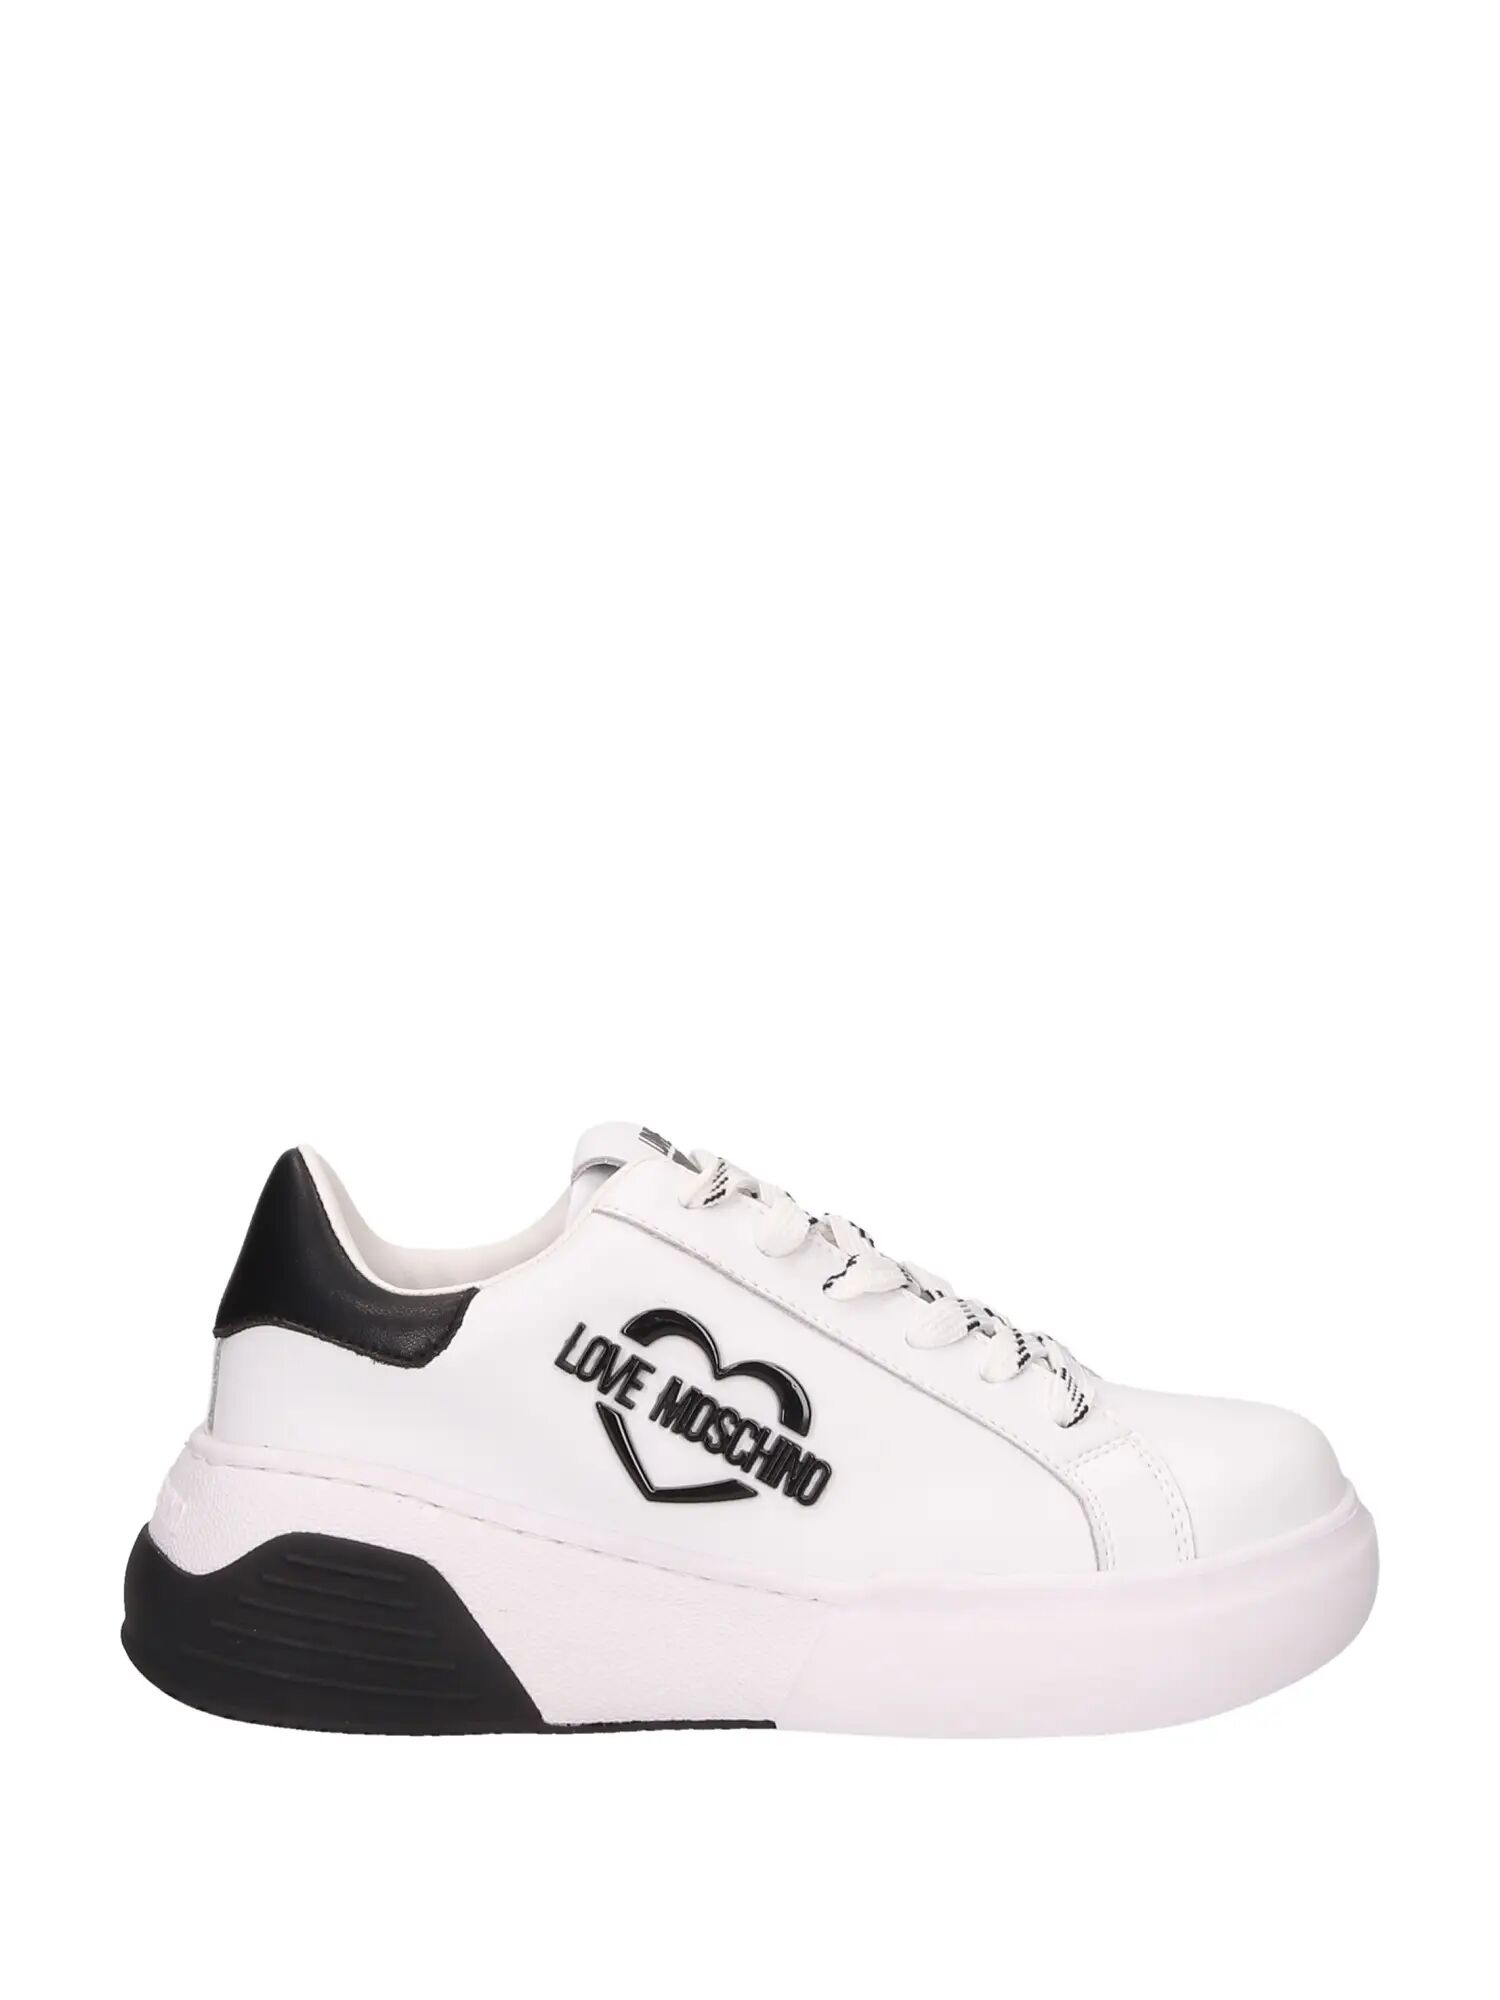 Moschino Sneakers Bianche Donna BIANCO/NERO 35